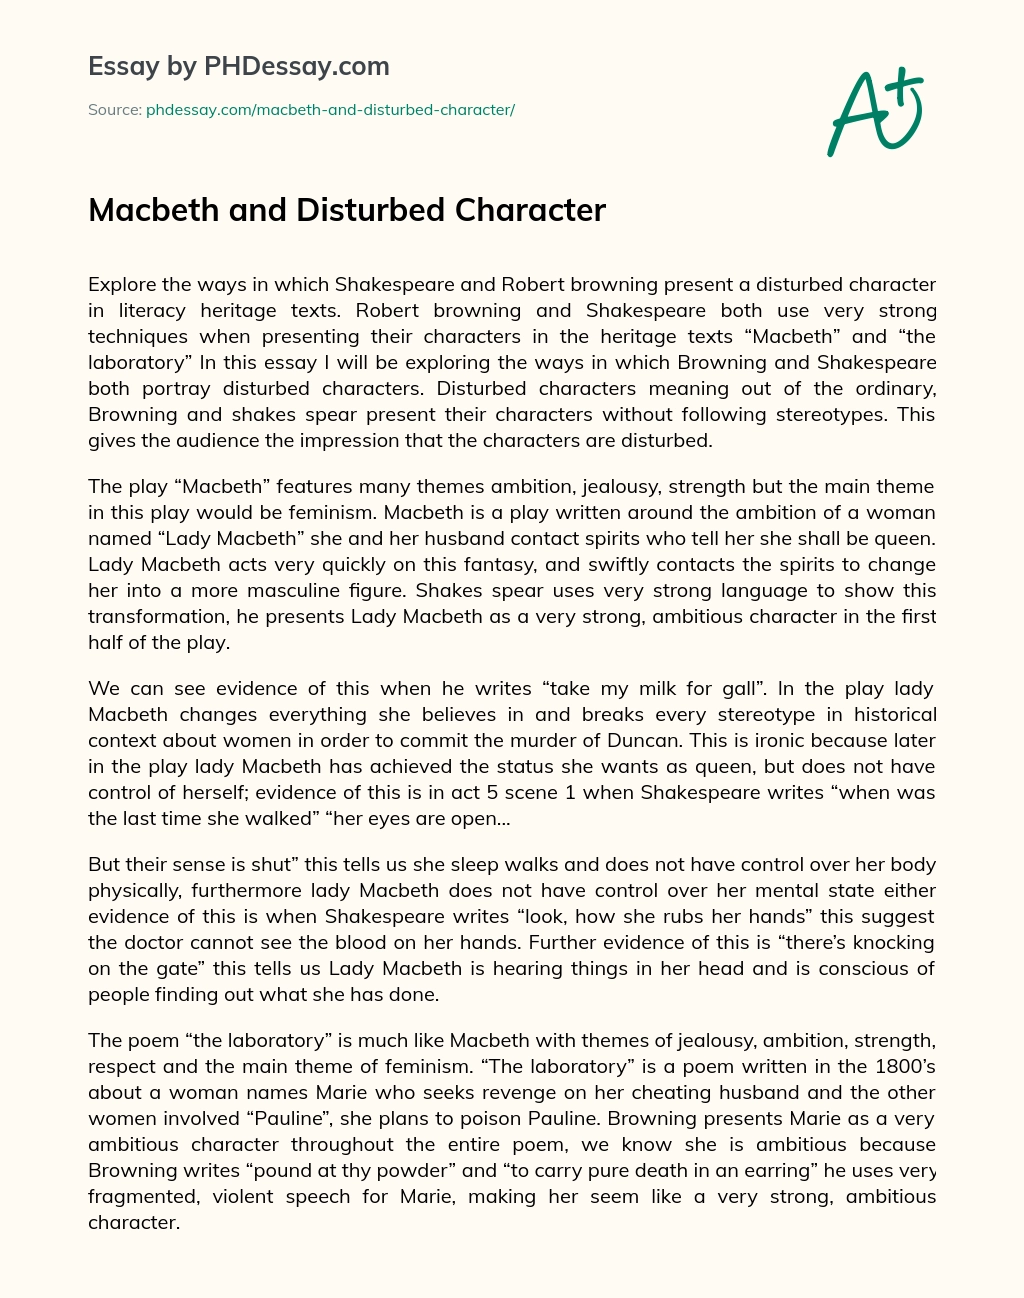 Macbeth and Disturbed Character essay